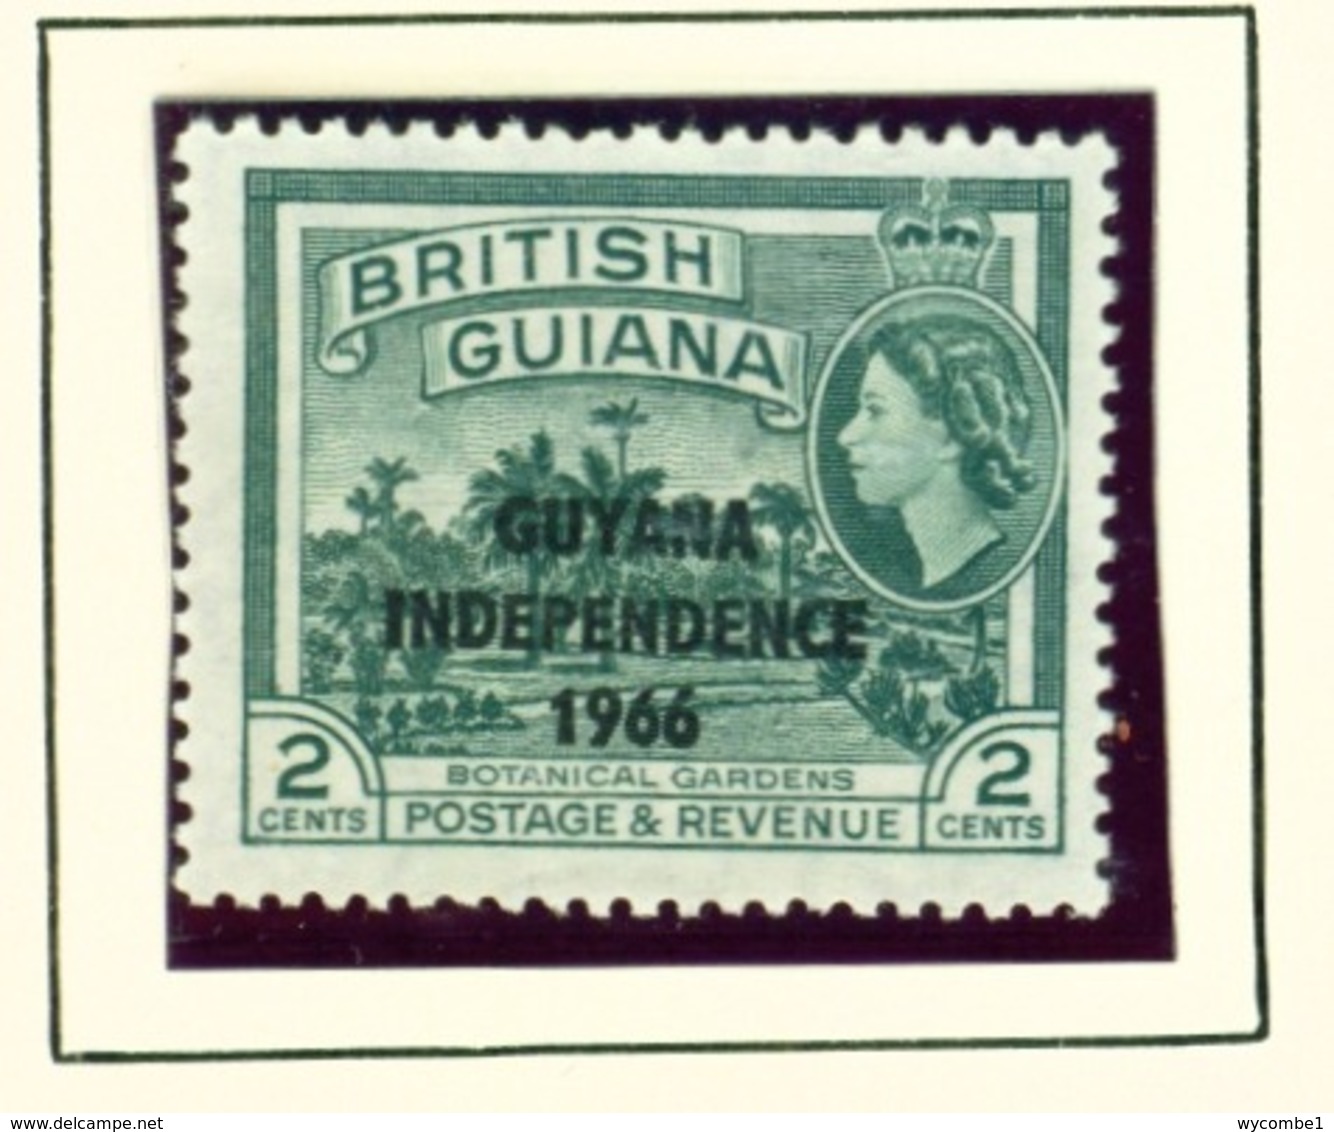 GUYANA  -  1966-67 Mult Script CA Watermark Definitive 2c Unmounted/Never Hinged Mint - Guyana (1966-...)